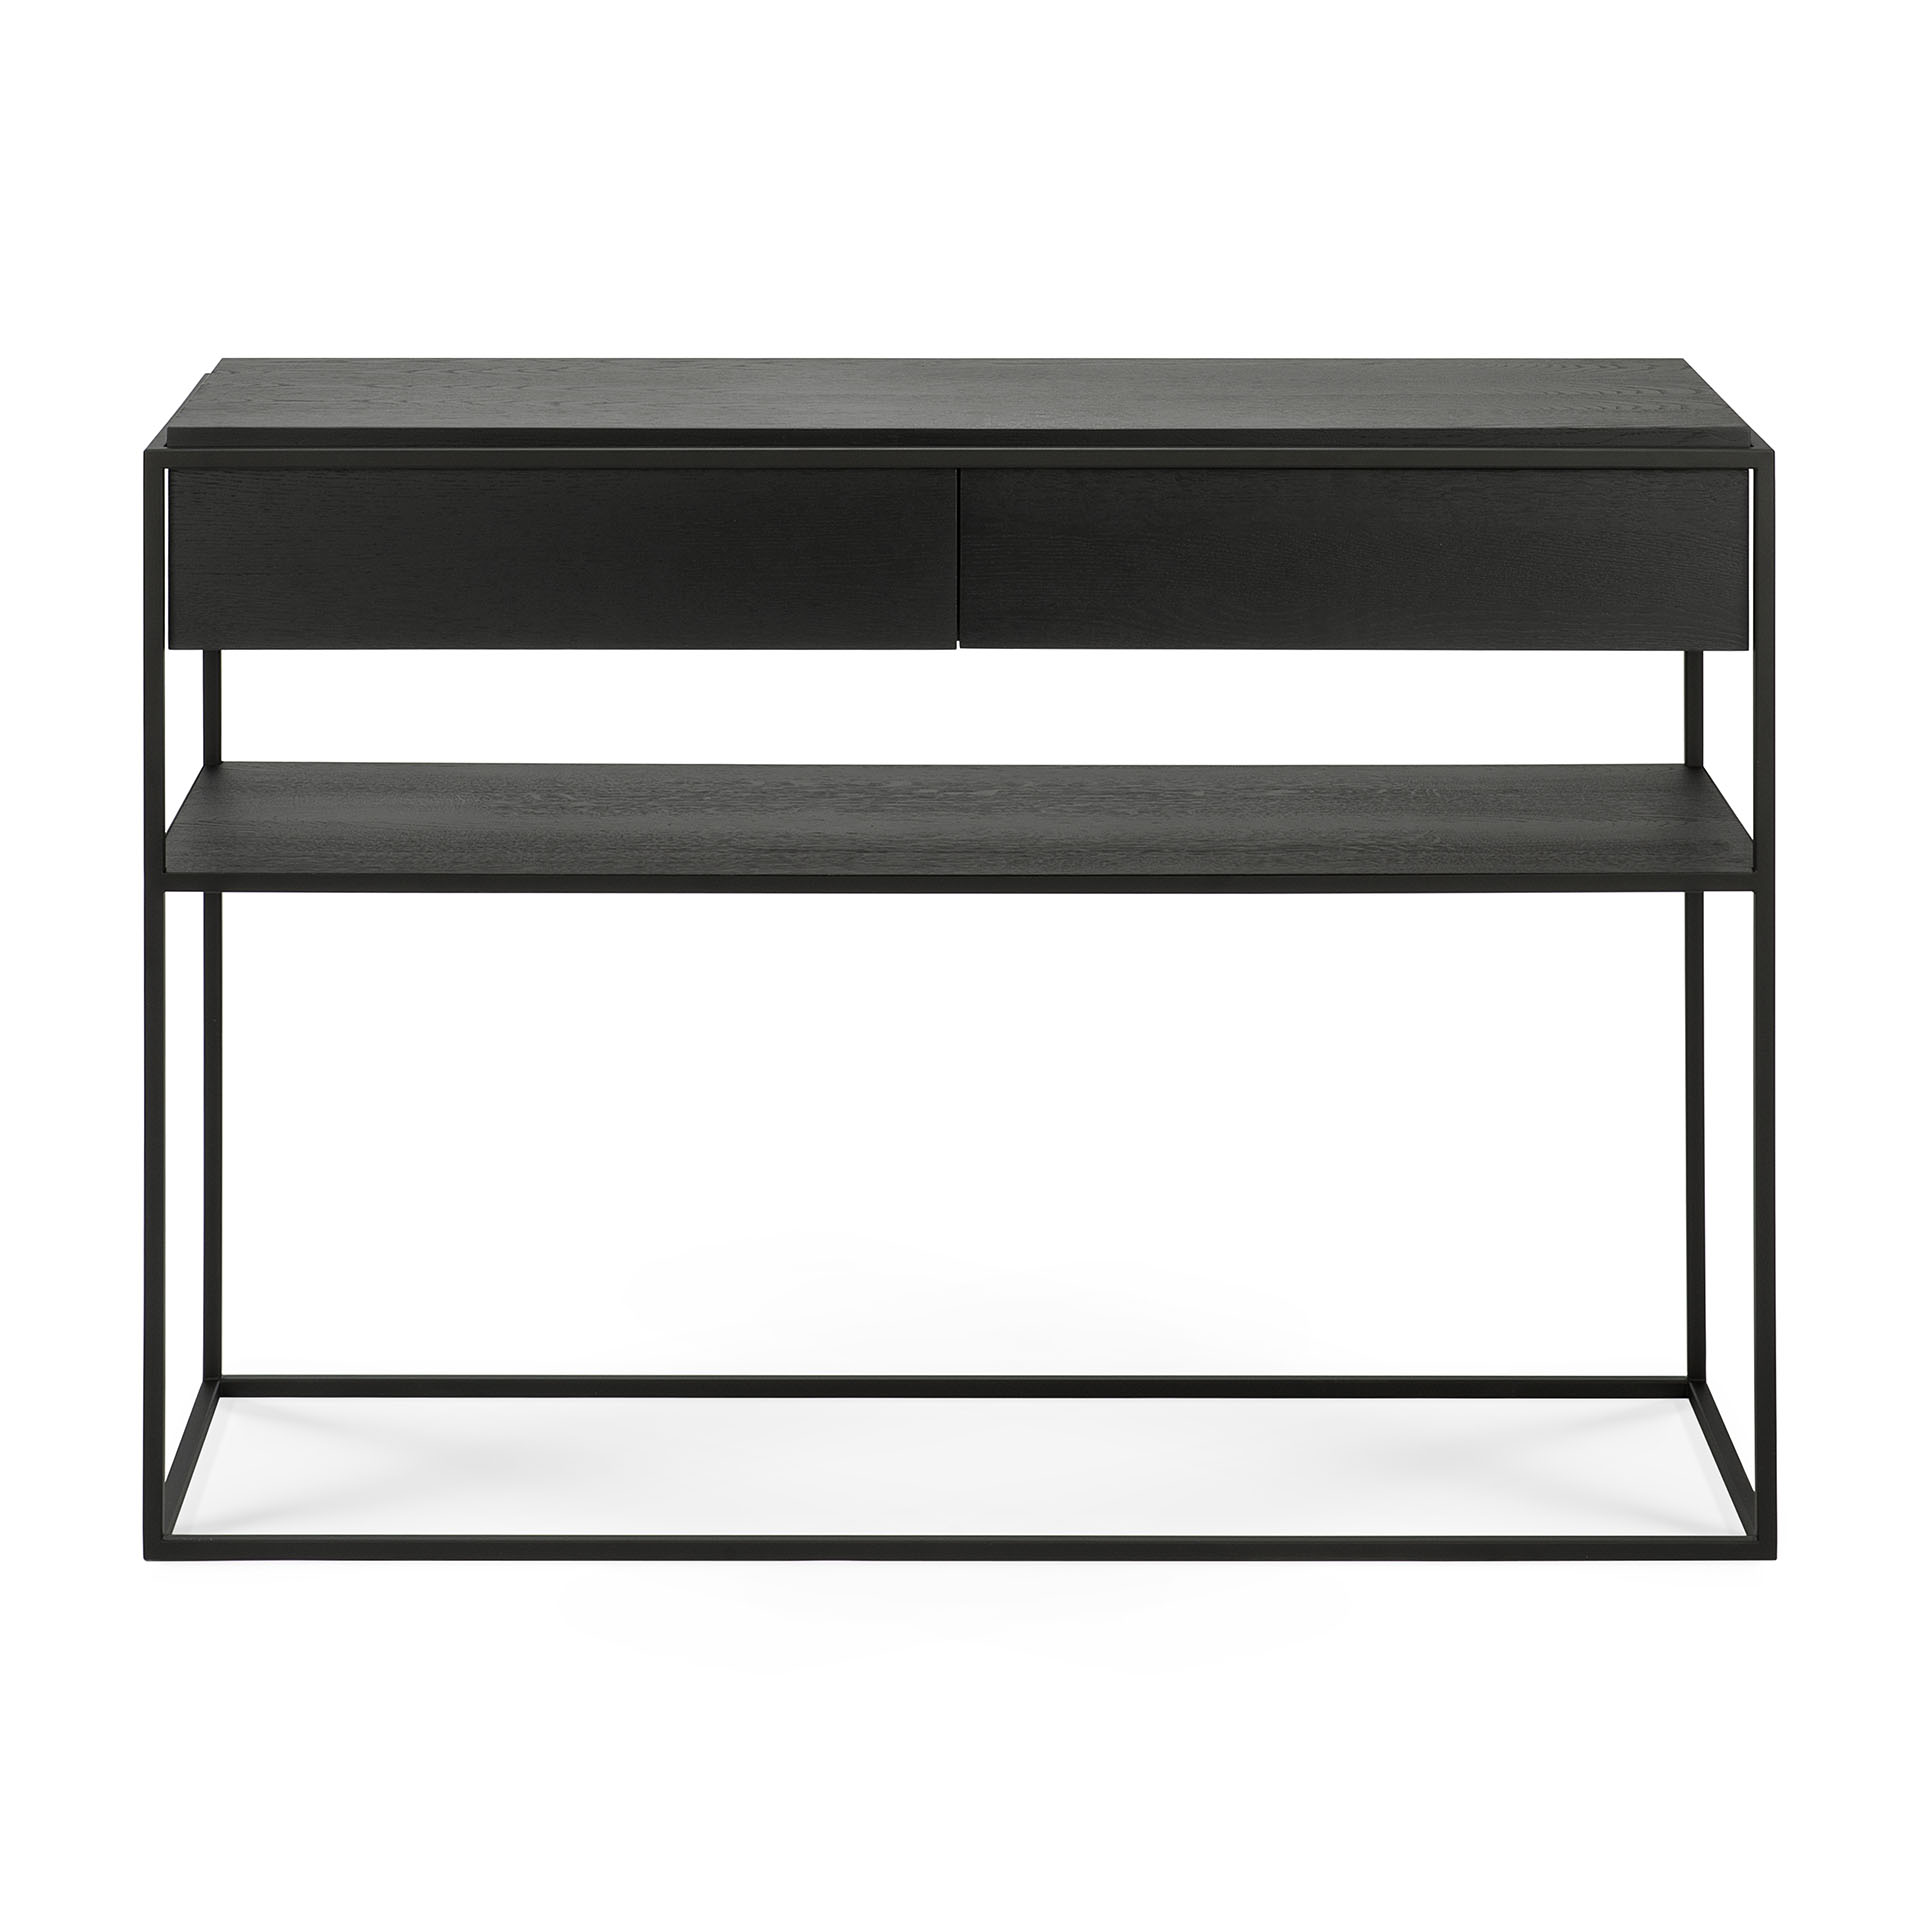 Monolit console - black oak -2 drawers -Ethnicraft